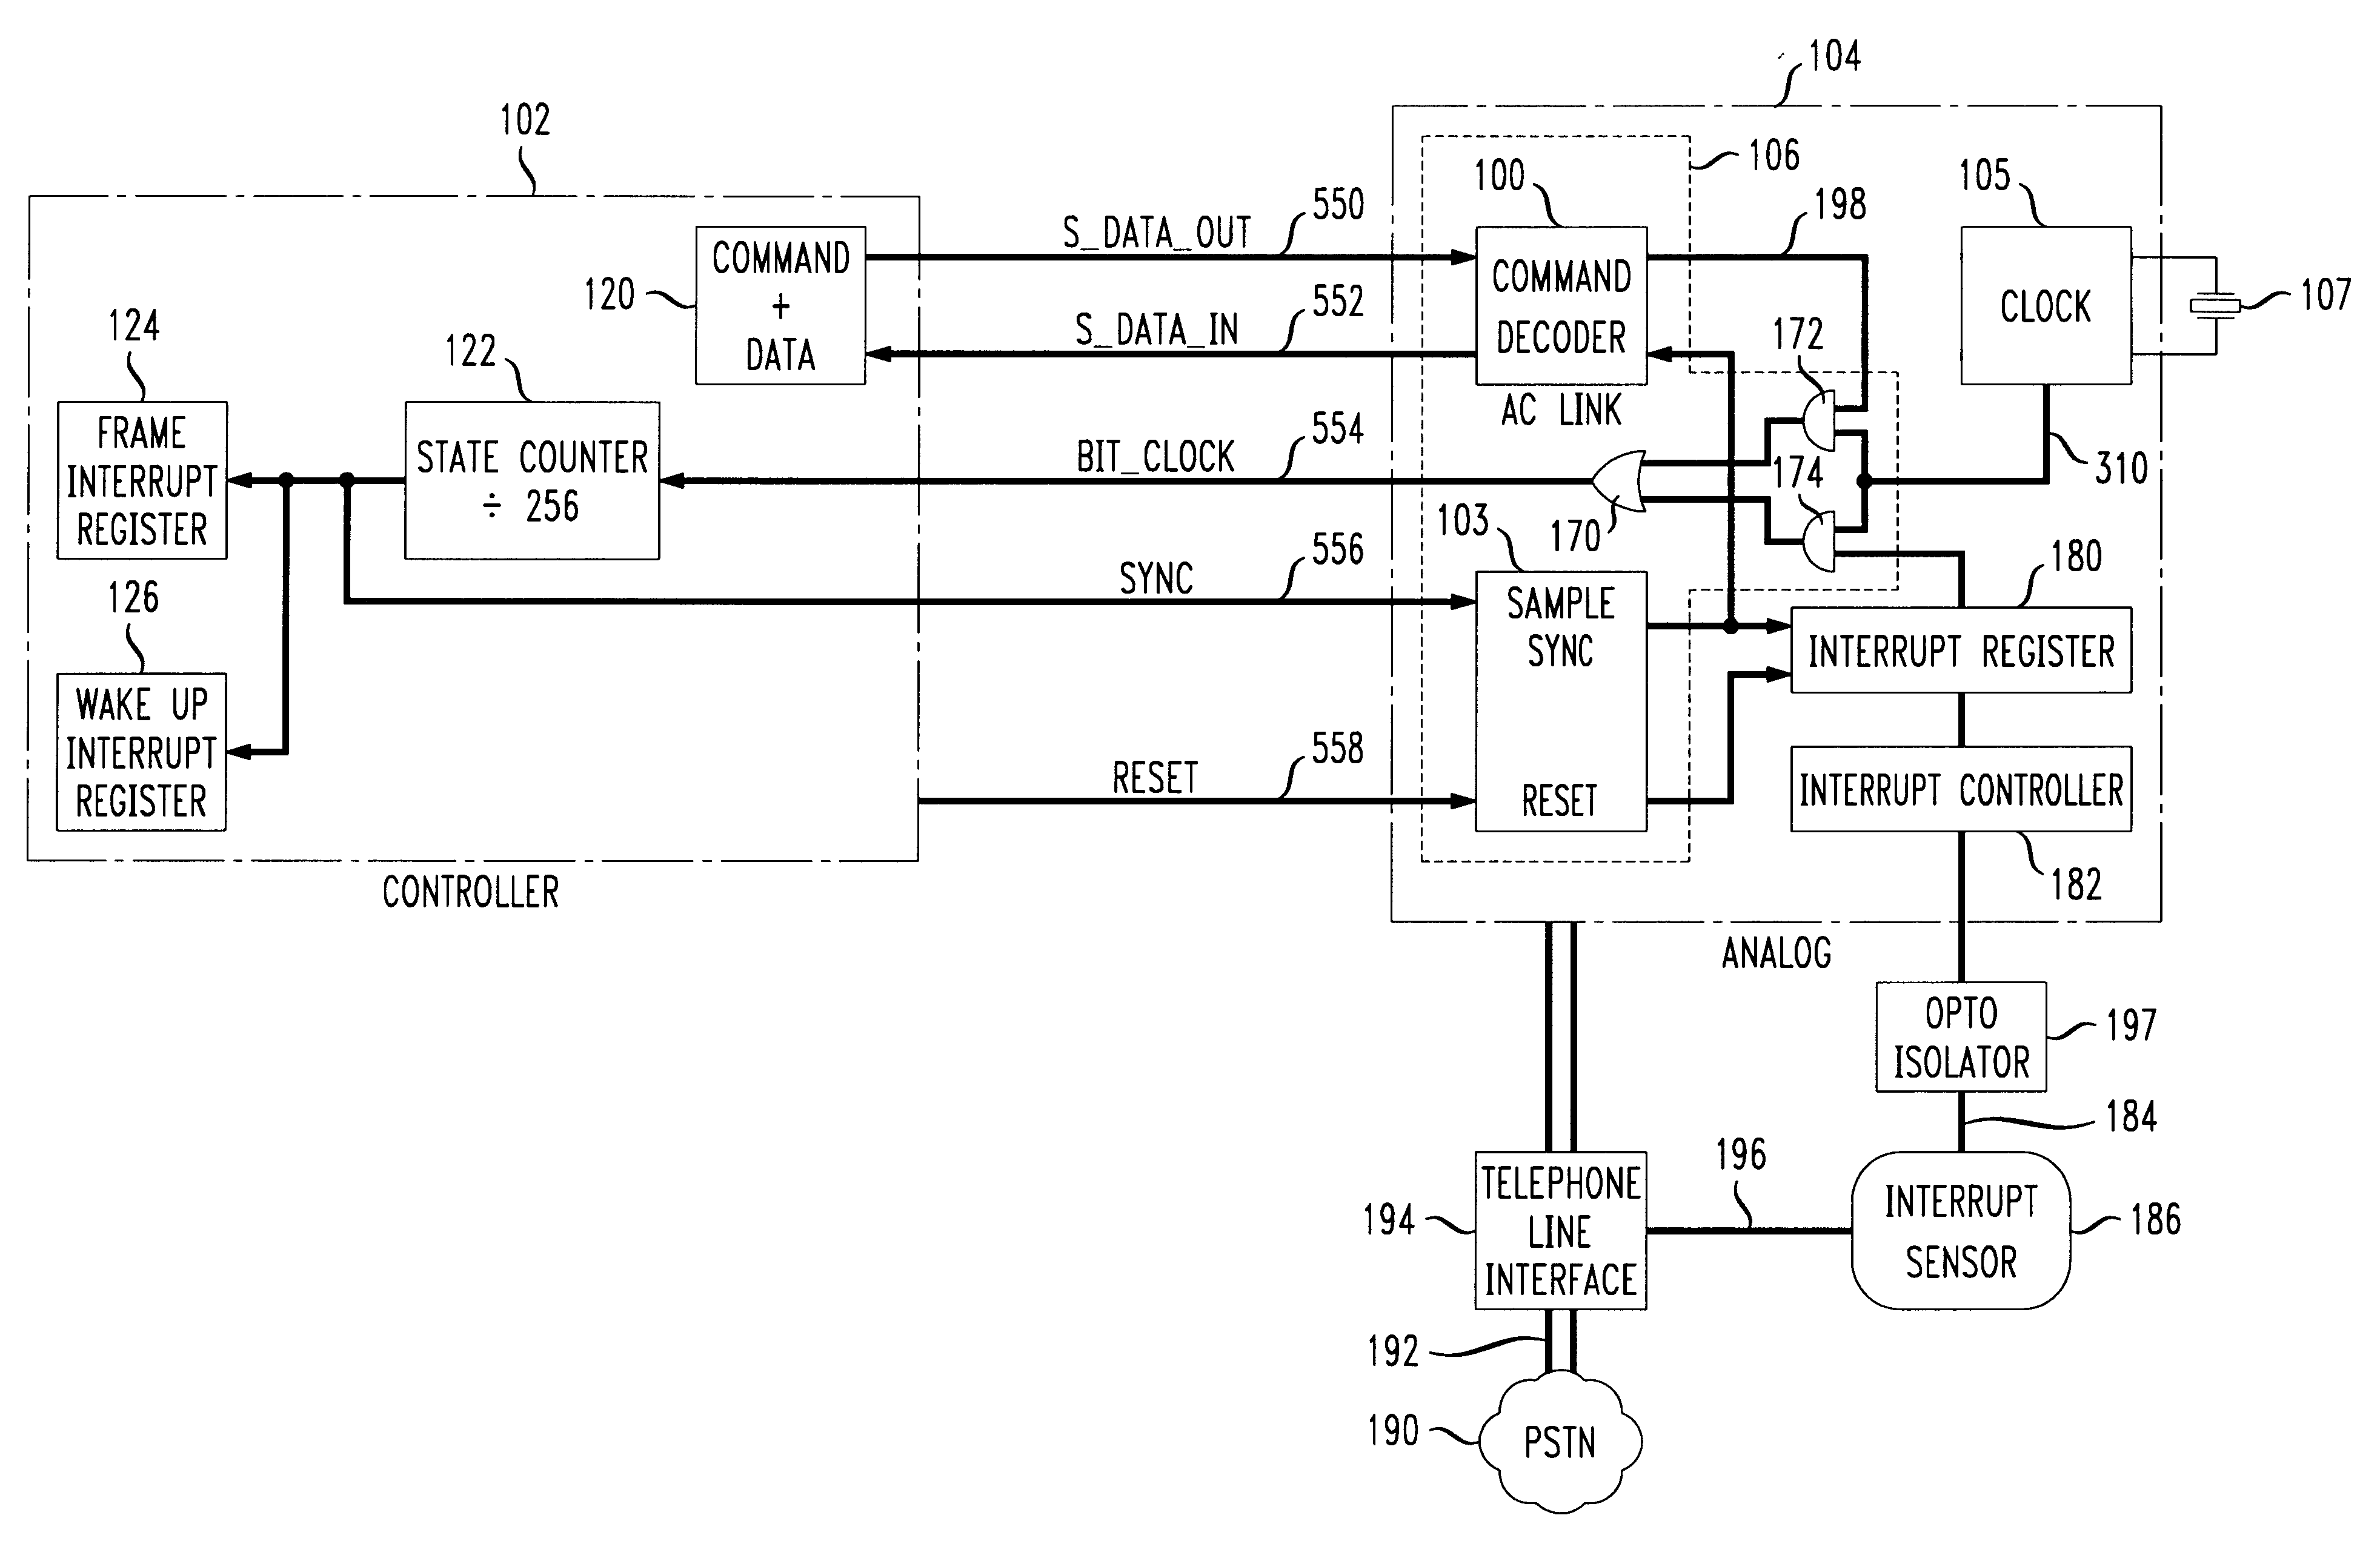 Interrupt mechanism using TDM serial interface